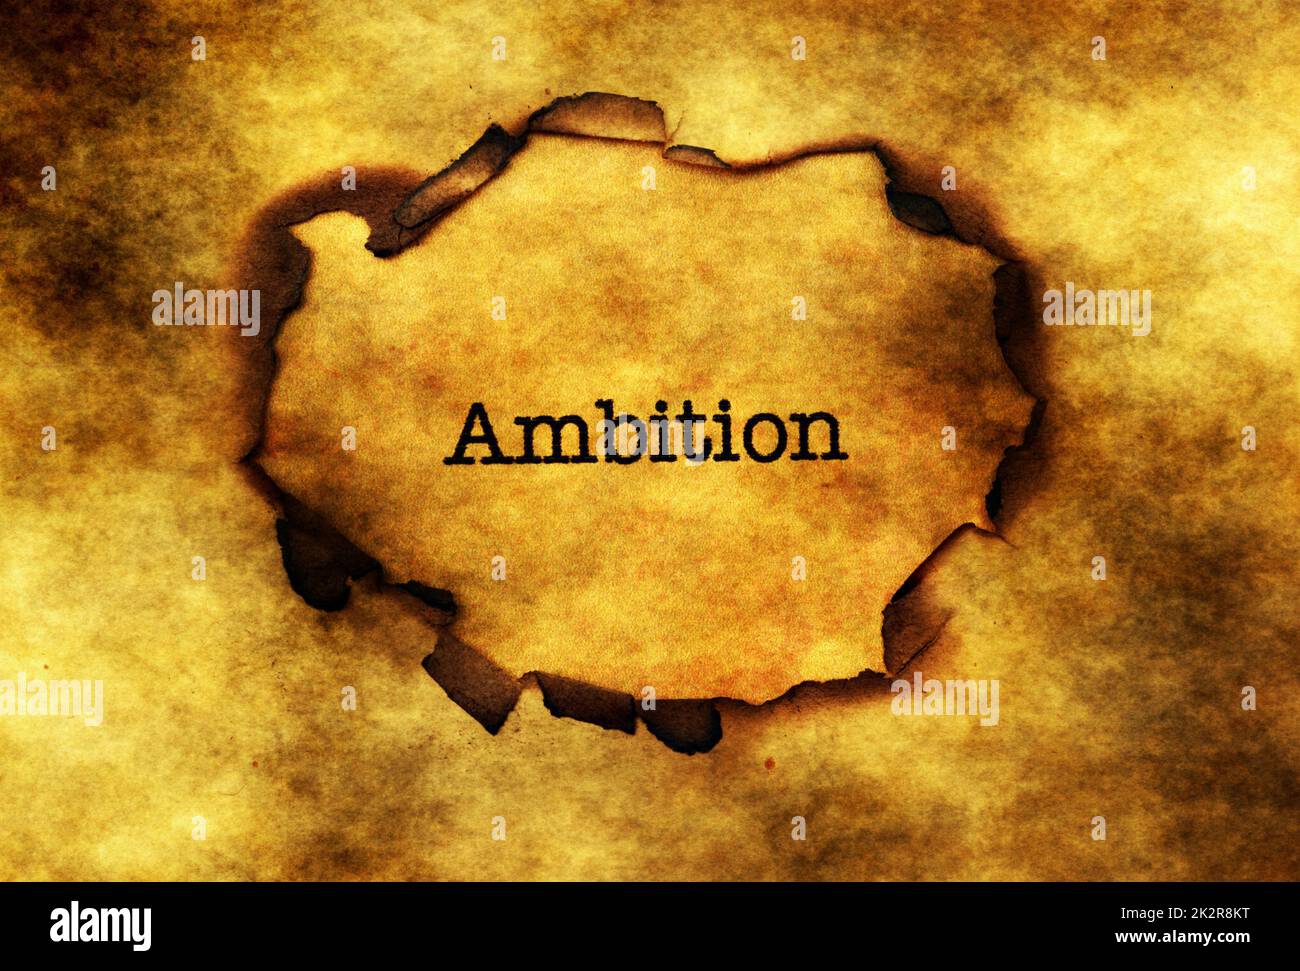 Ambition text on grunge background Stock Photo